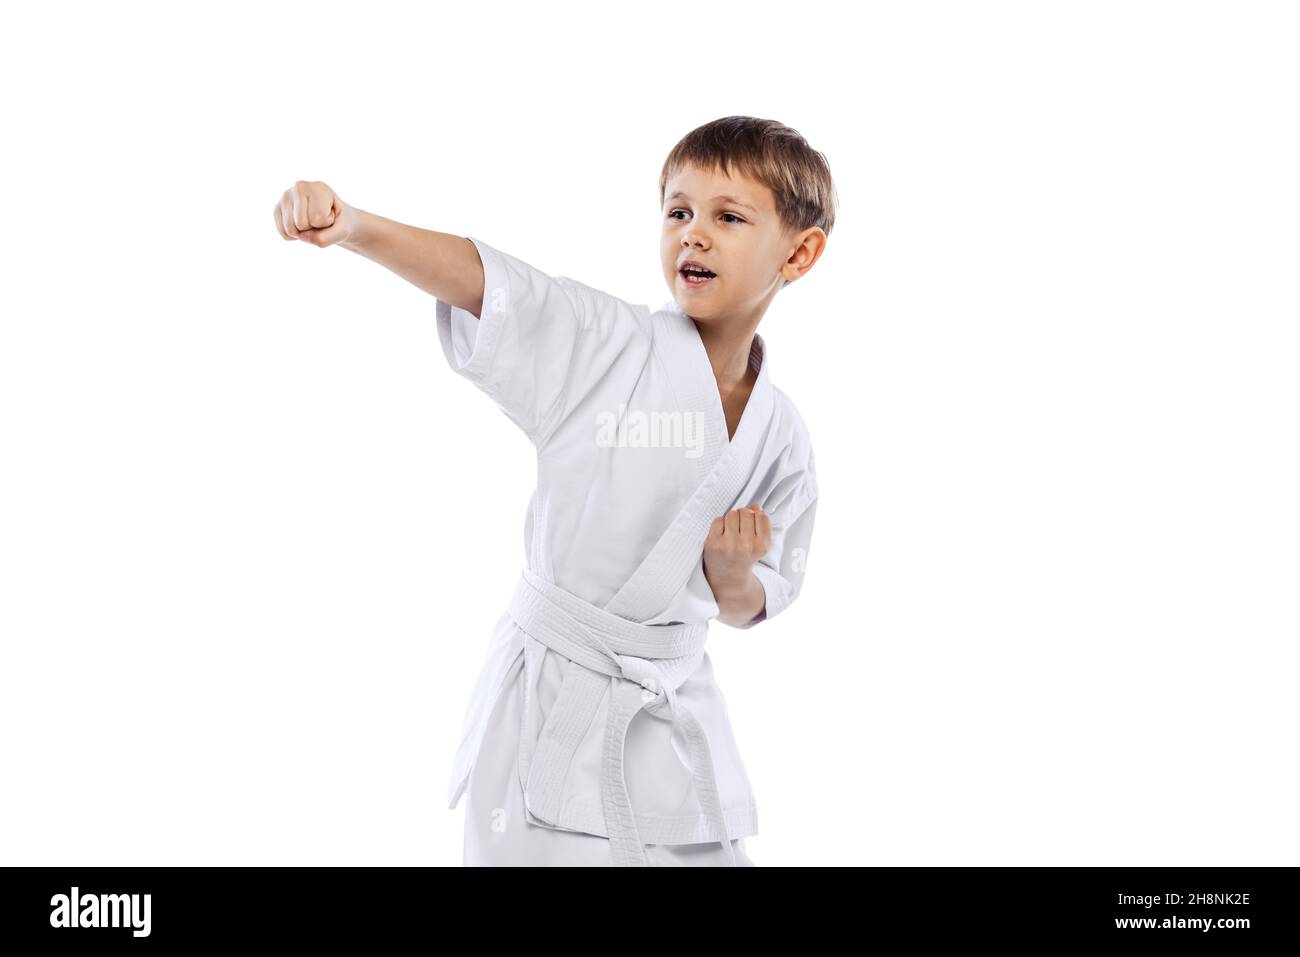 Teacher and Boy Doing Karate Poses Stock Image - Image of kimono,  taekwondo: 213388789